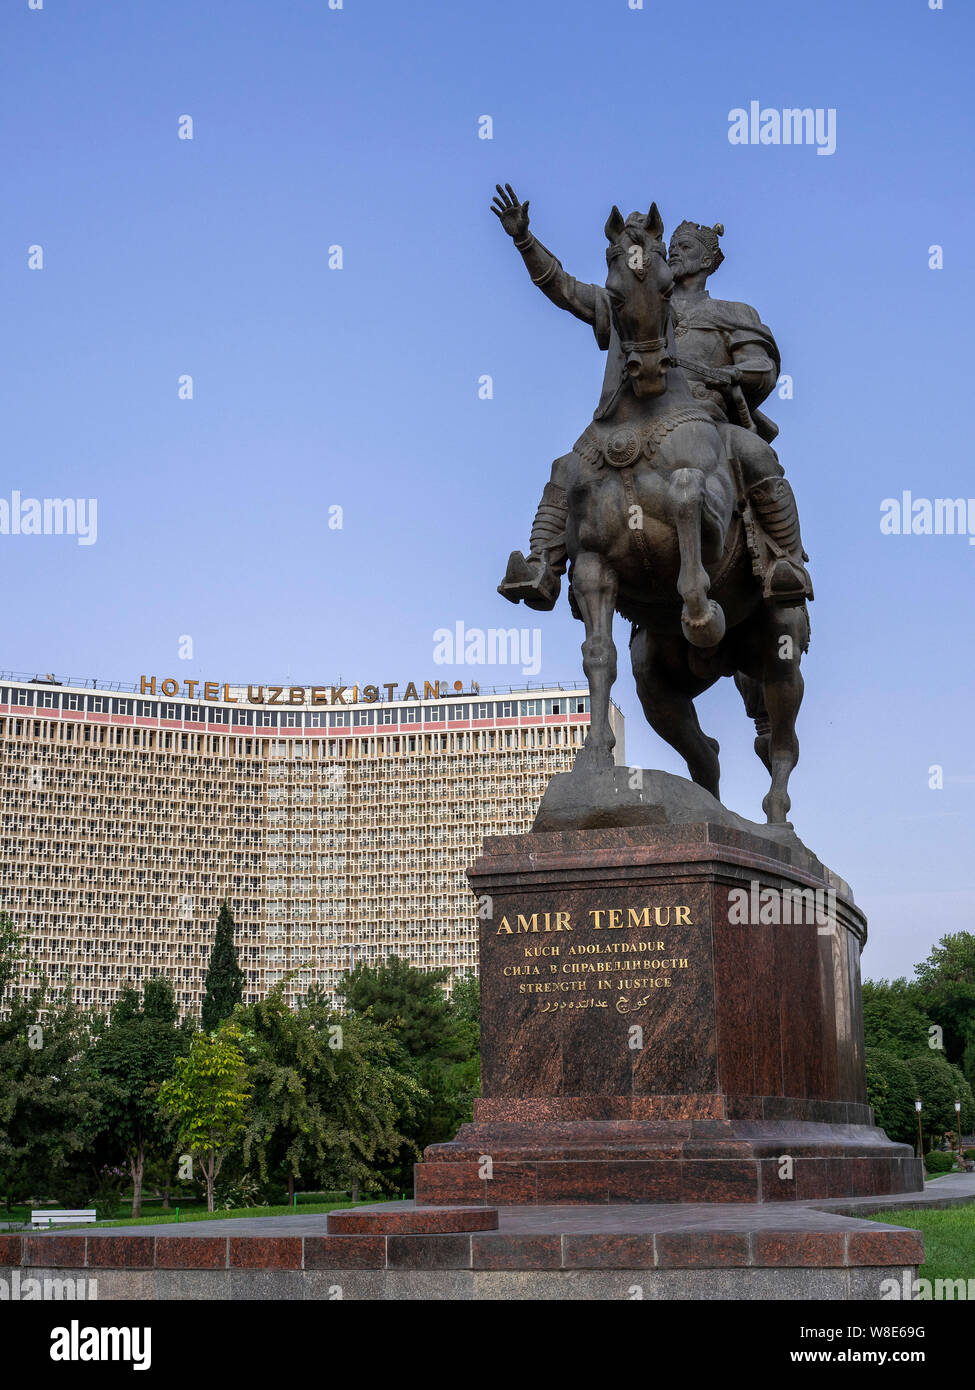 Un monumento di Amir Timur di fronte Hotel Uzbekistan Tashkent, Uzbekistan, Asia Foto Stock